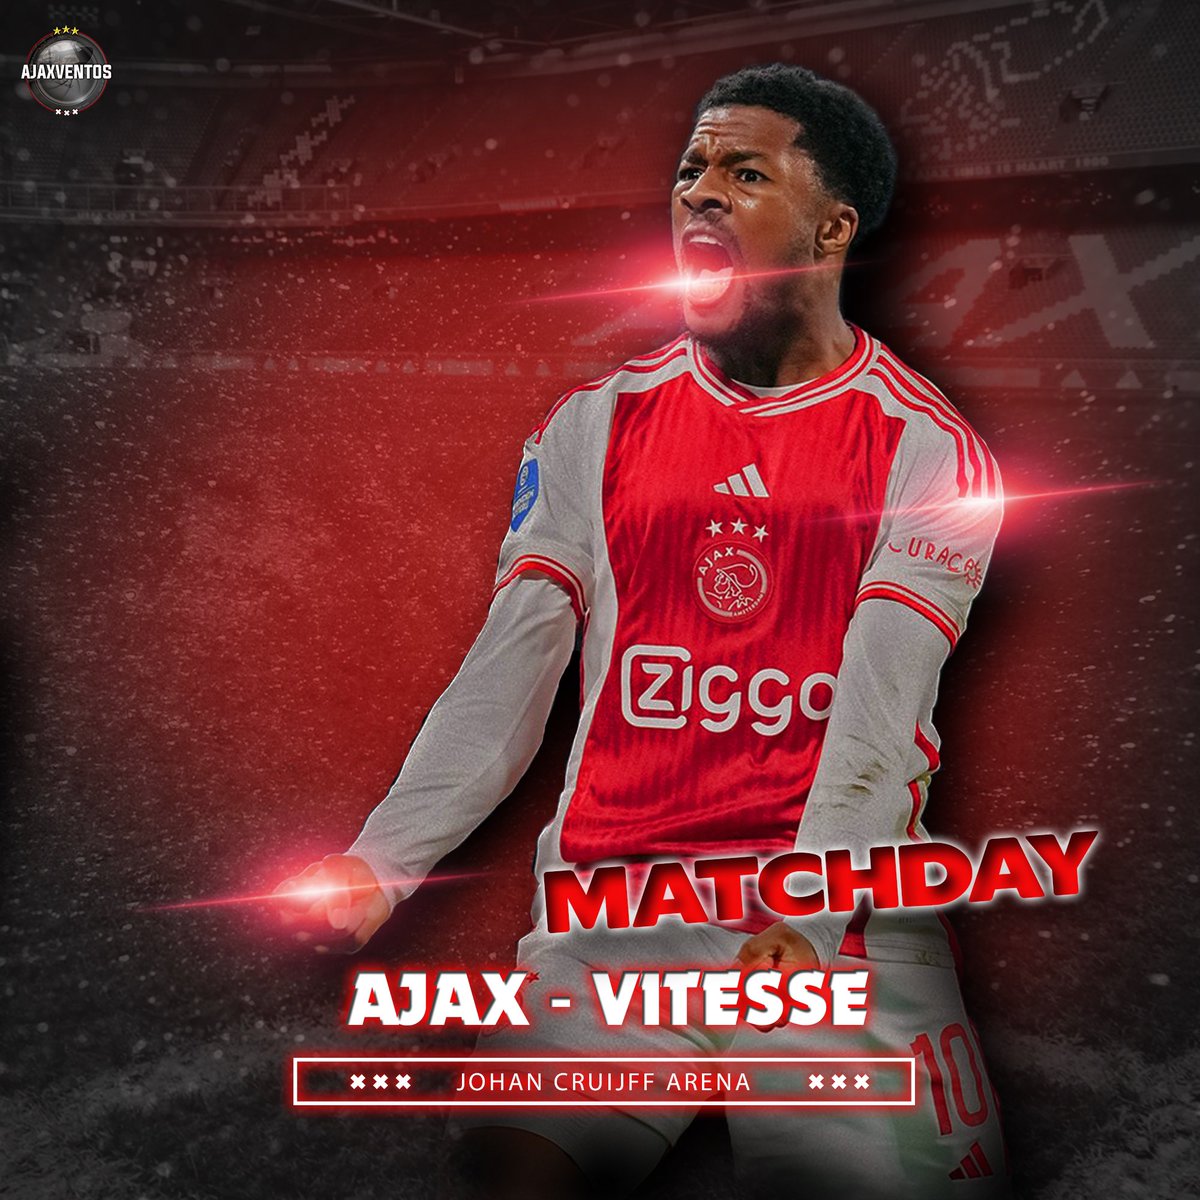 MATCHDAY! 🔥❌❌❌🔥 #AjaVit #Ajax #Amsterdam #WijZijnAjax